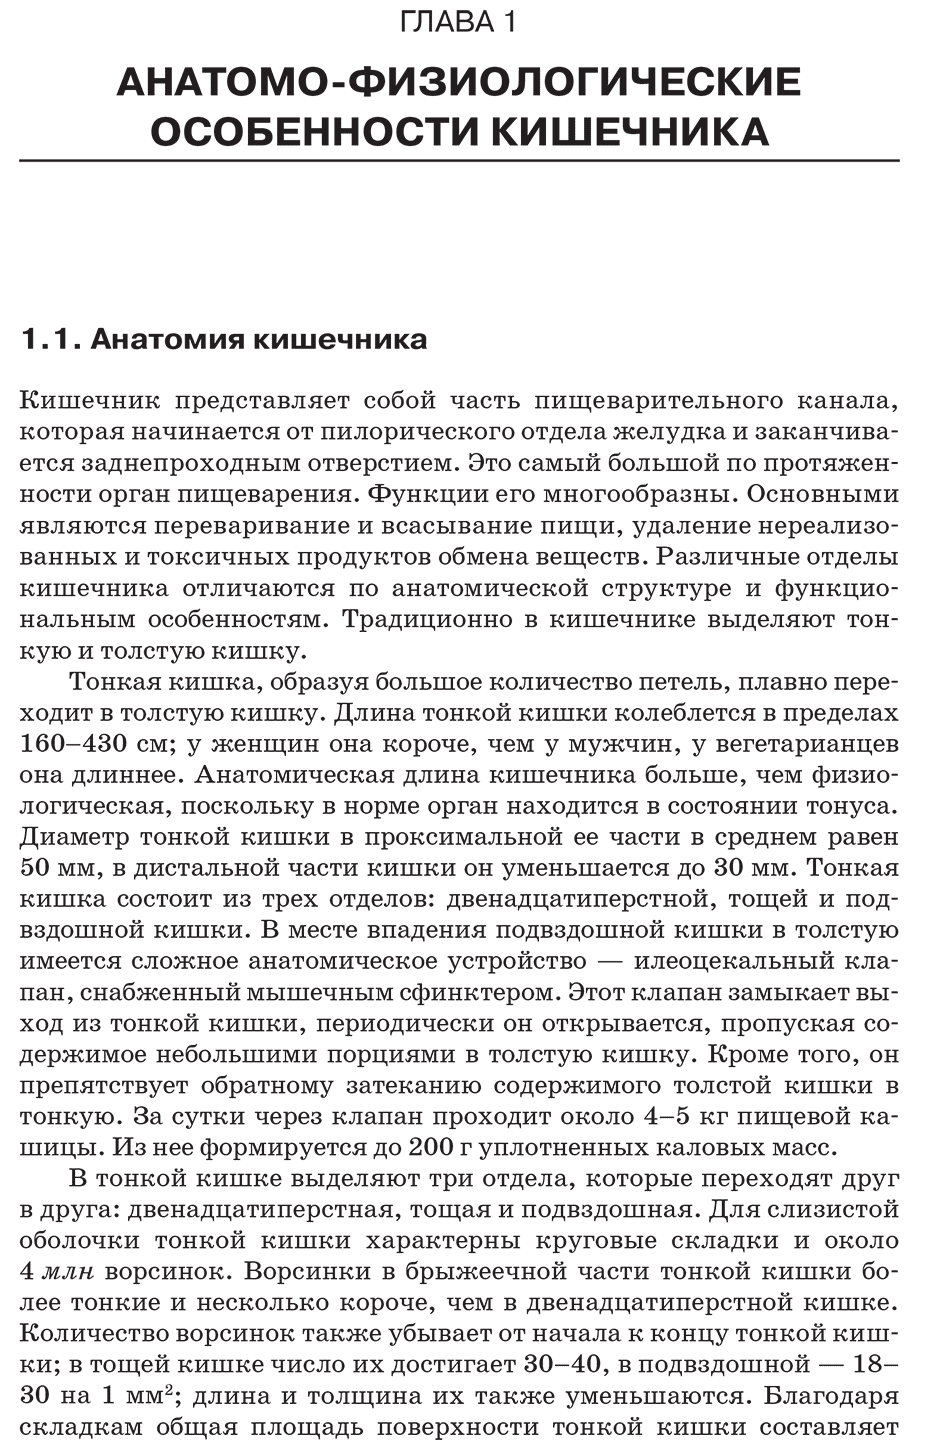 Пример страницы из книги "Болезни кишечника" - А. А. Свистунов